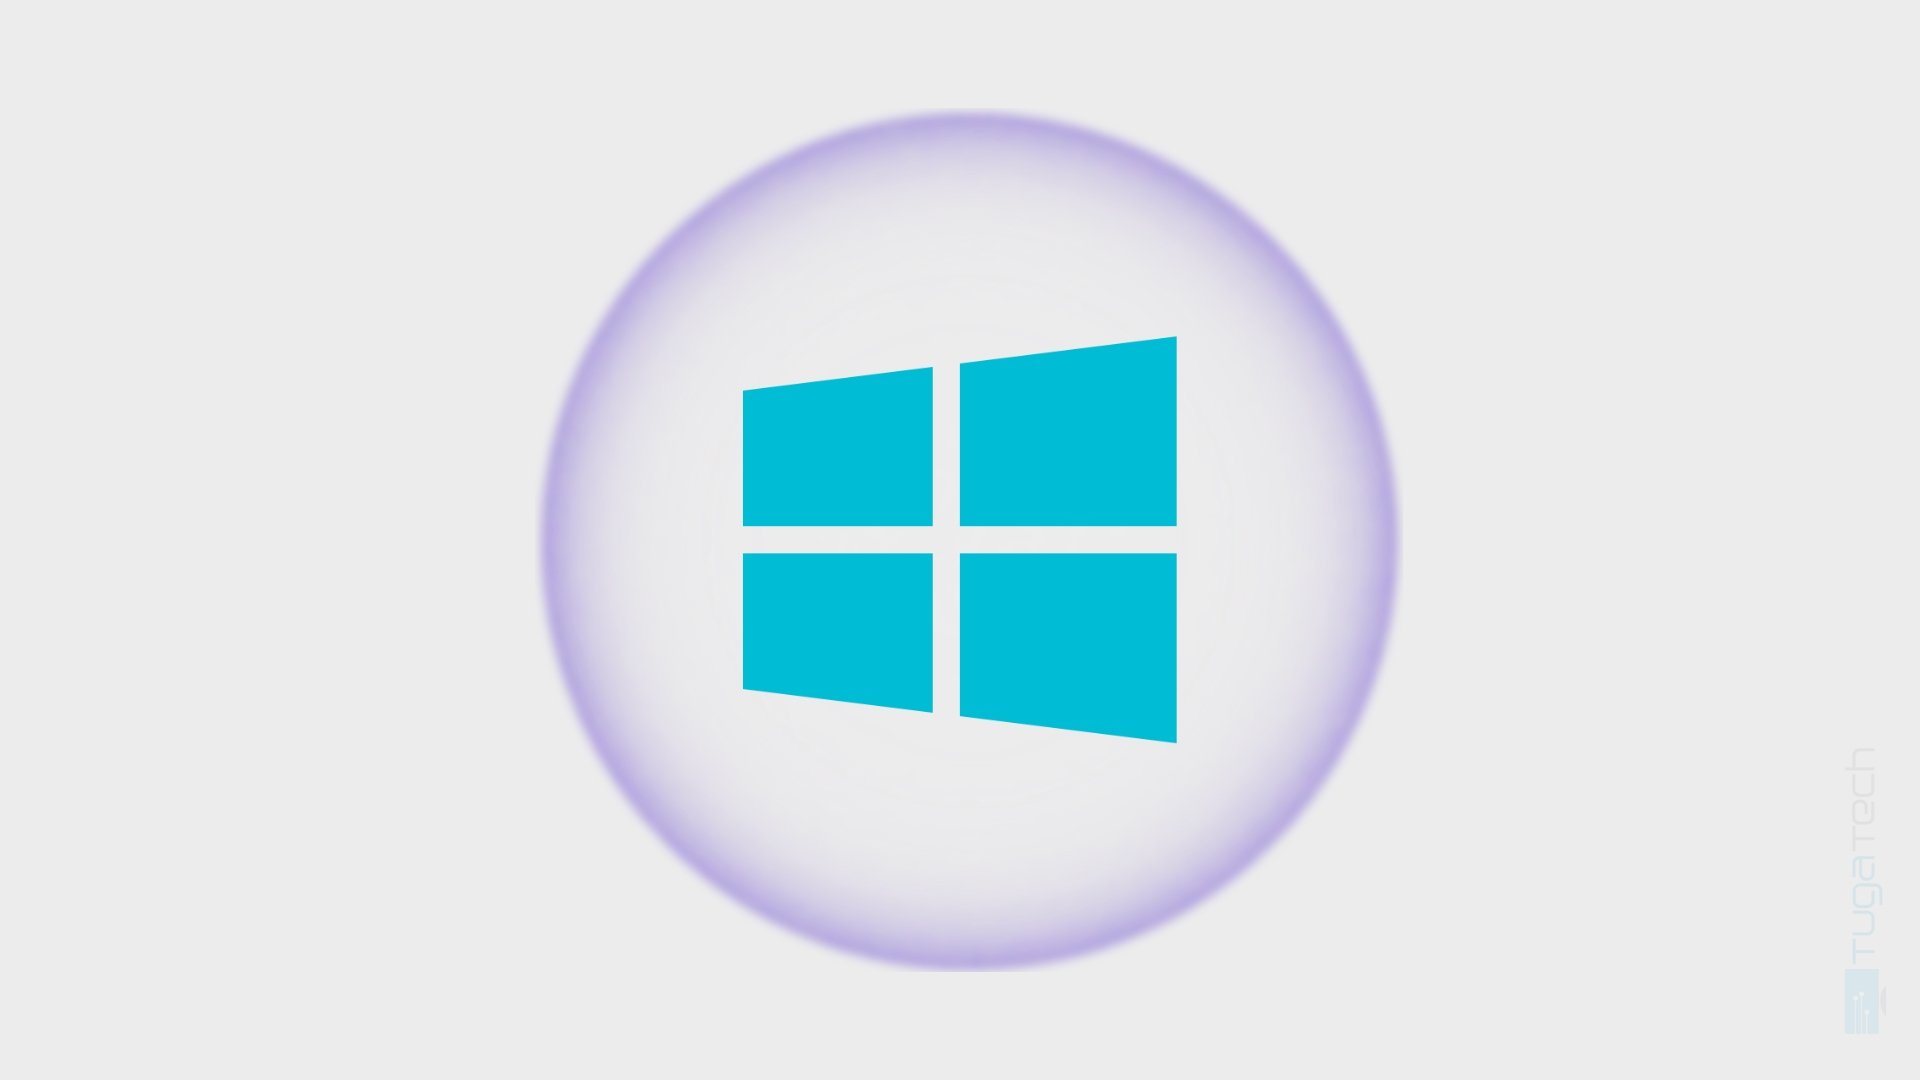 Microsoft windows logo